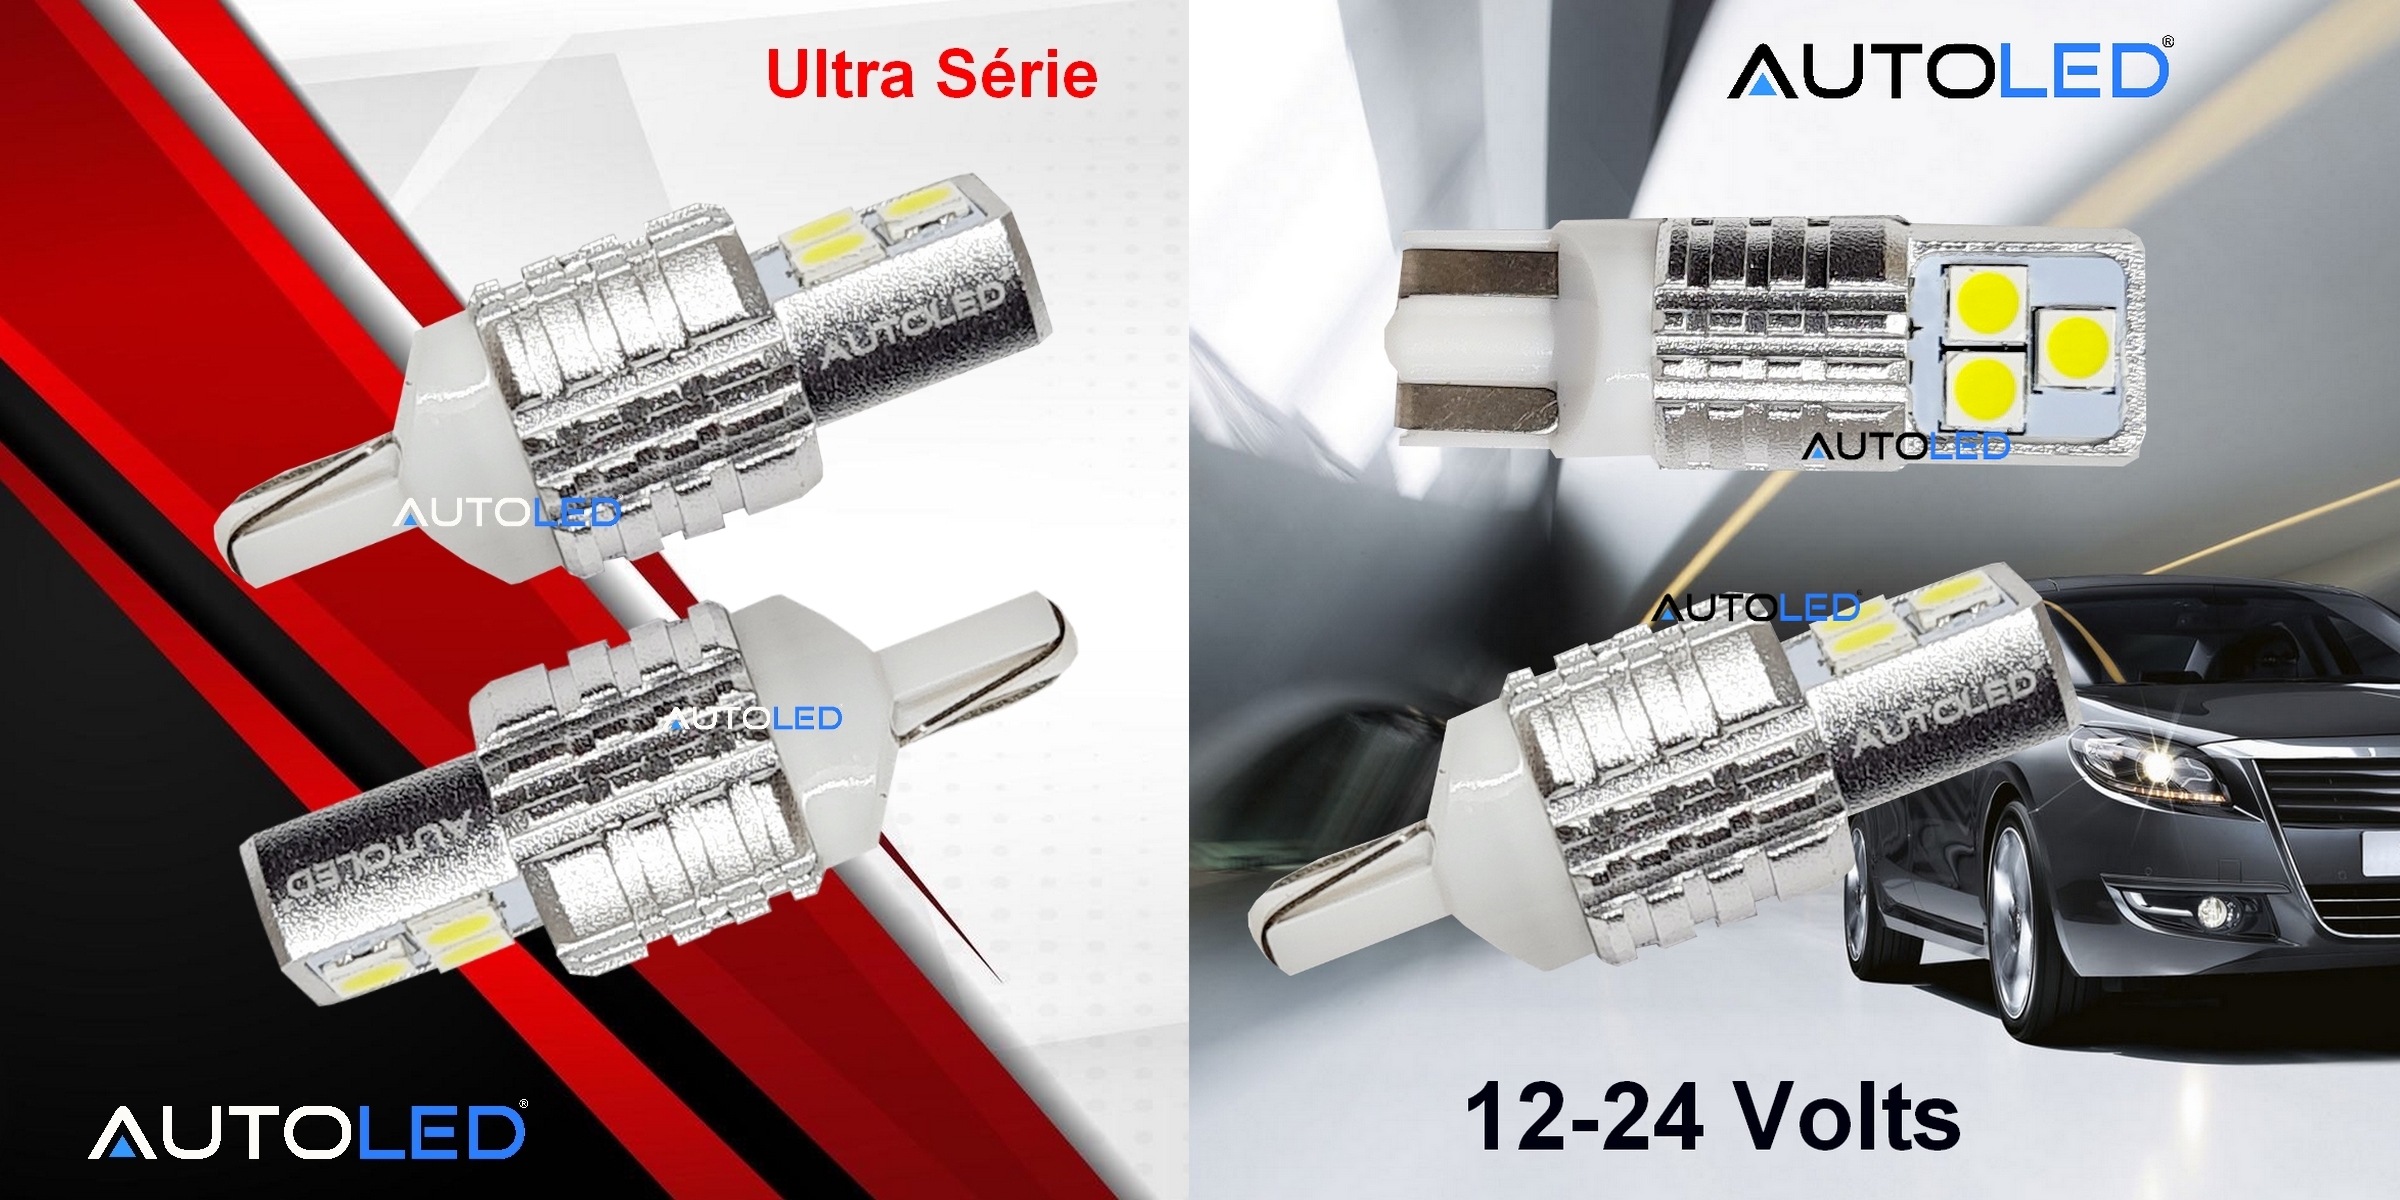 Ampoule LED T10 12v ULTRA SERIE autoled - 5